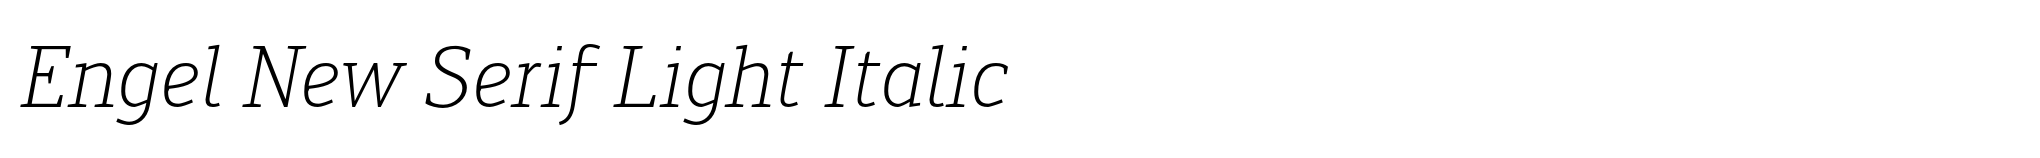 Engel New Serif Light Italic image